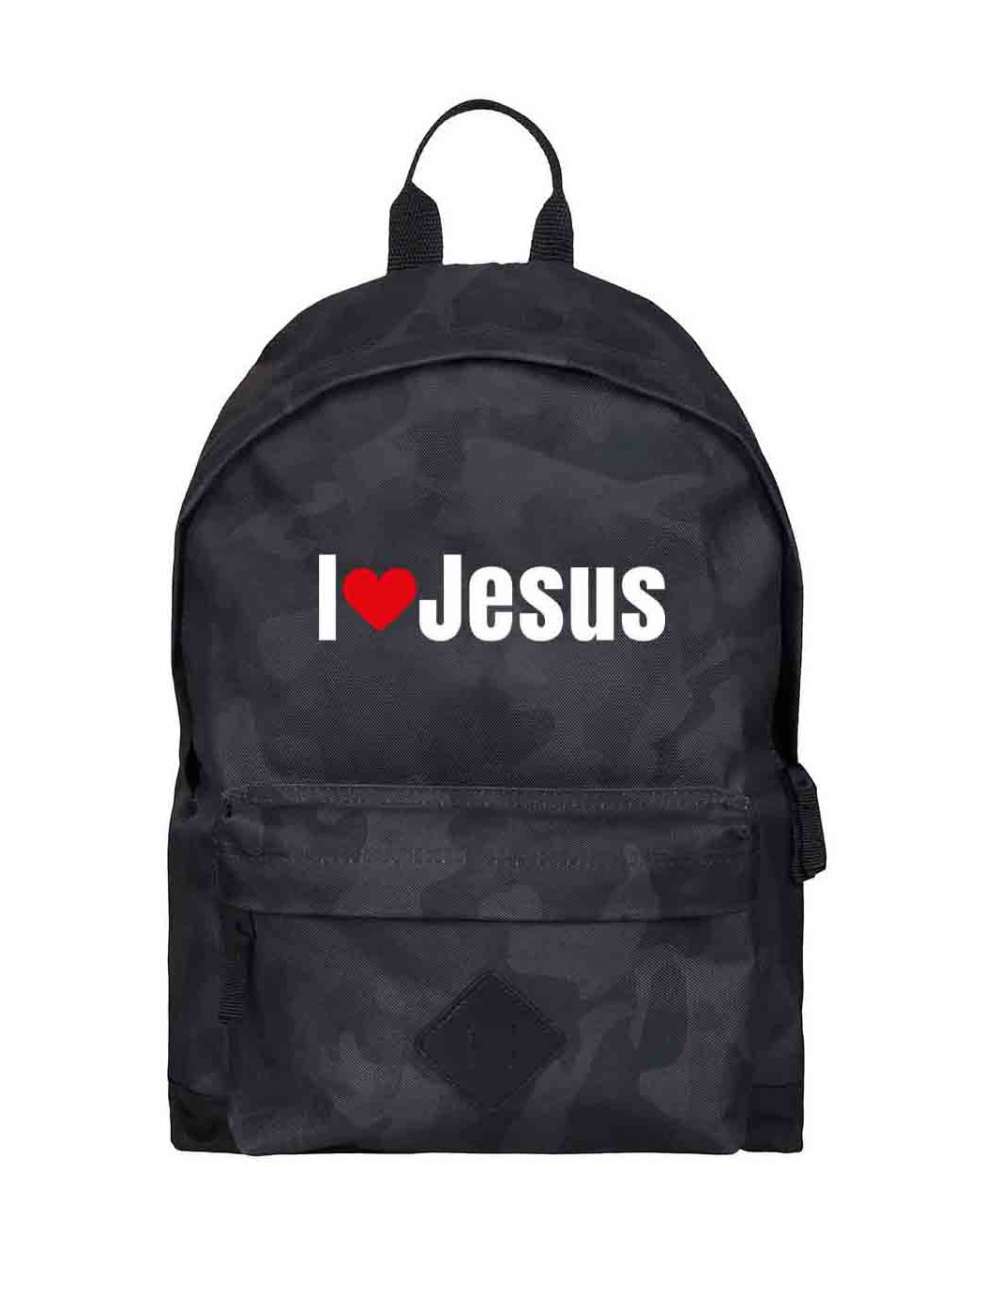 Plecak Szkolny I Love Jesus